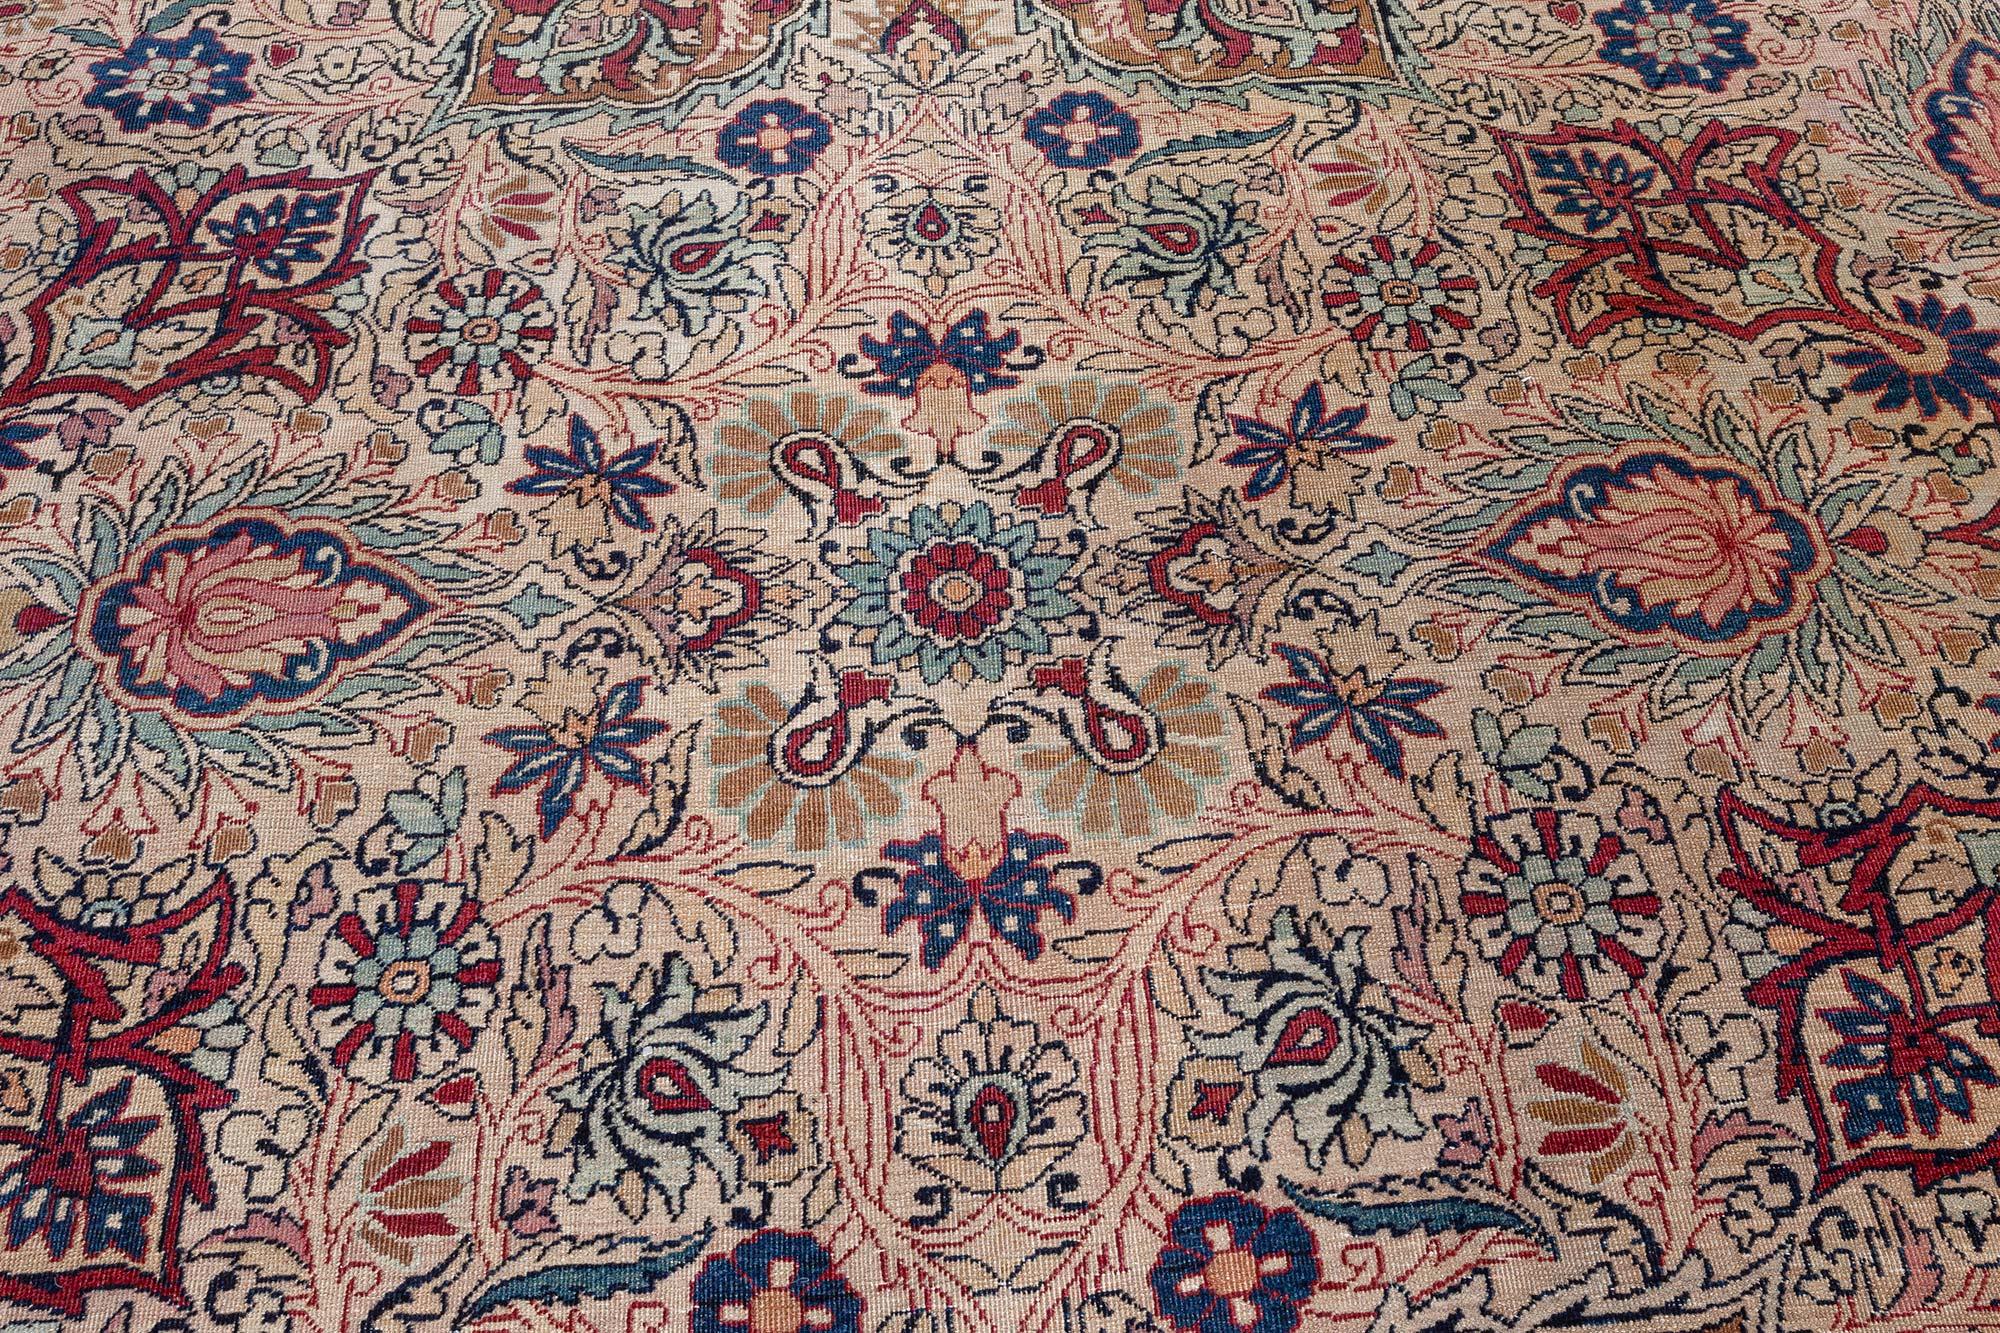 Antique Persian Kirman rug
Size: 13'5